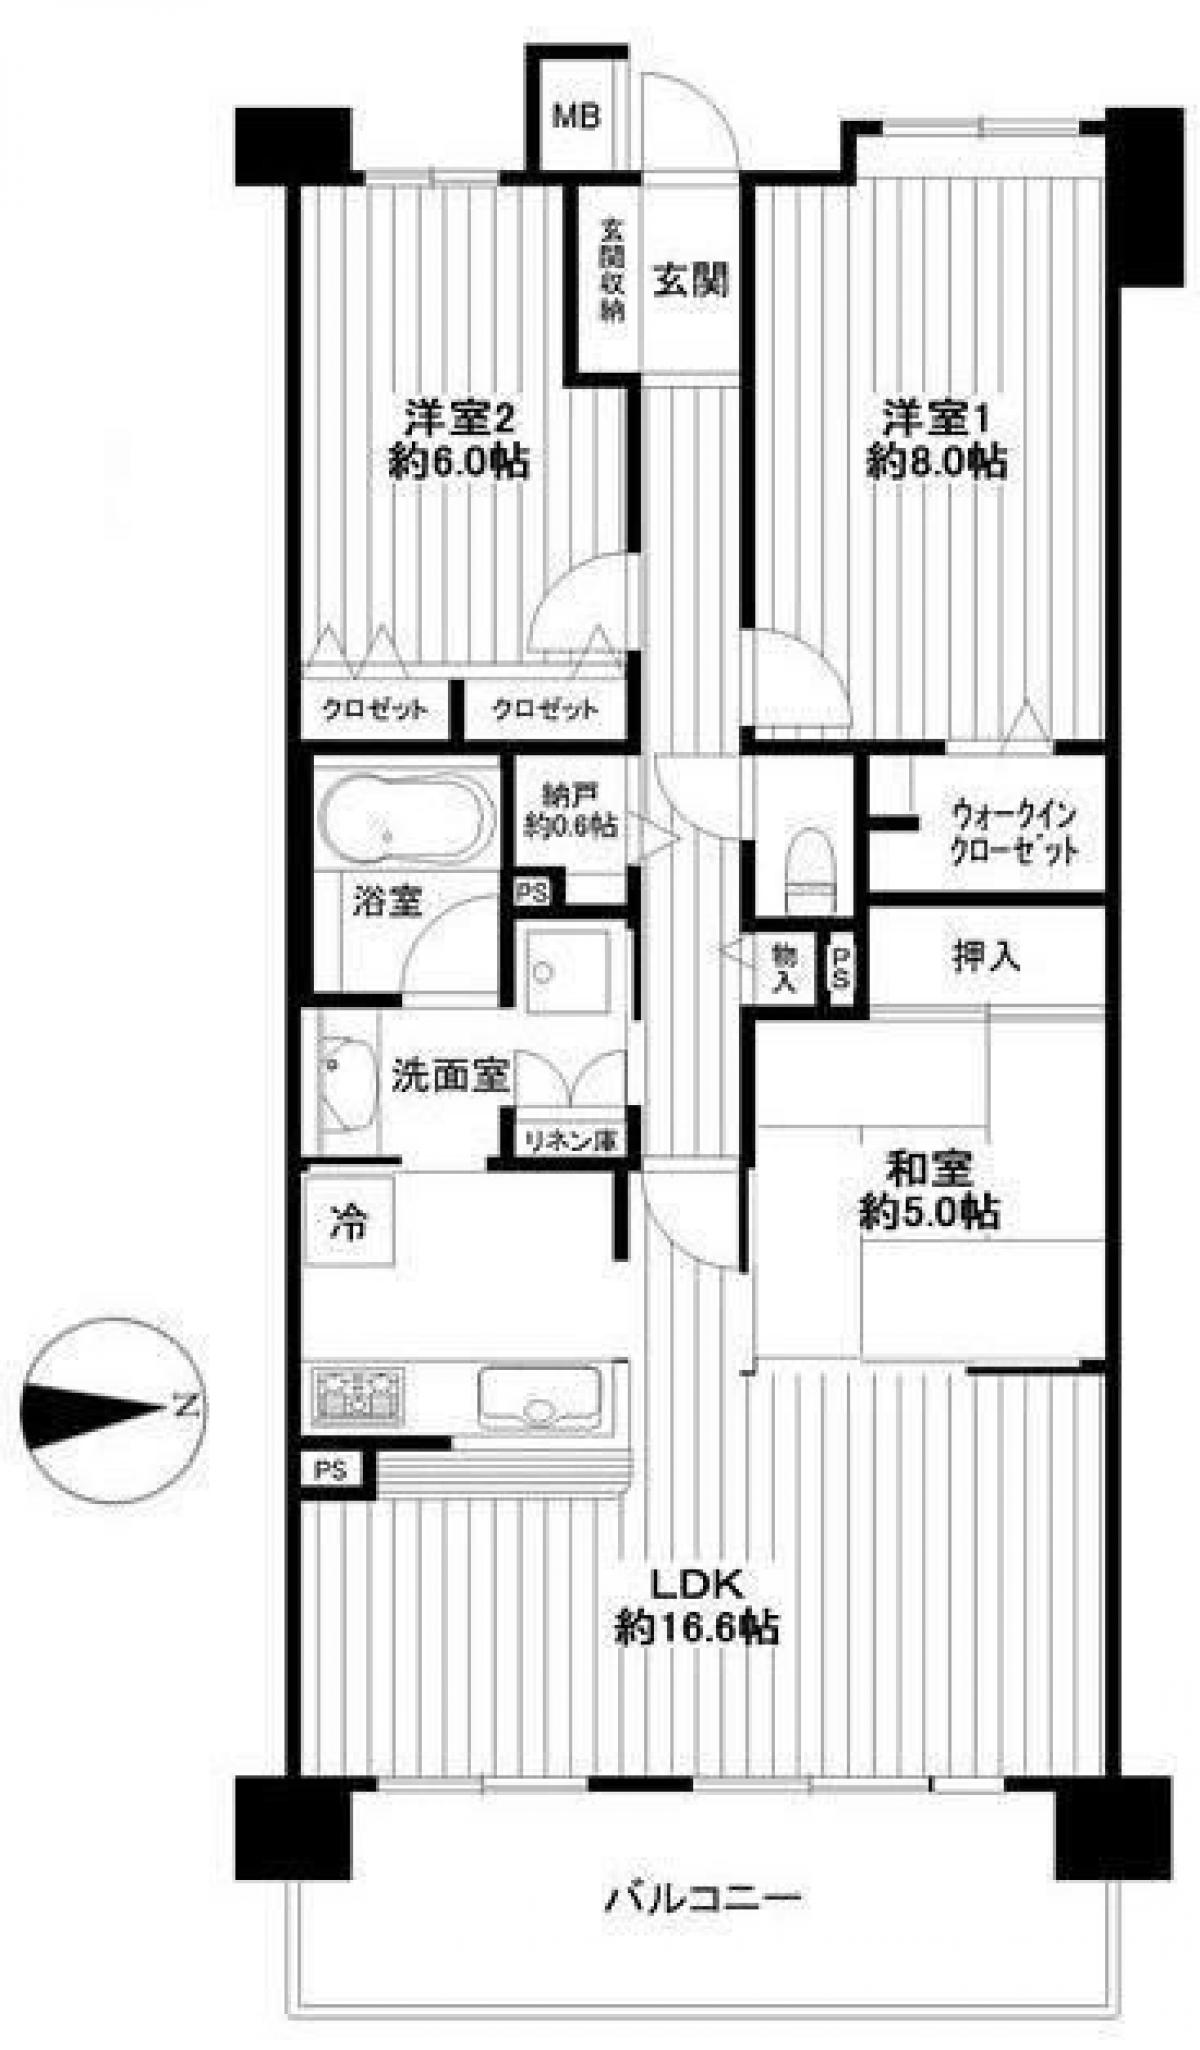 Picture of Apartment For Sale in Tsukuba Shi, Ibaraki, Japan